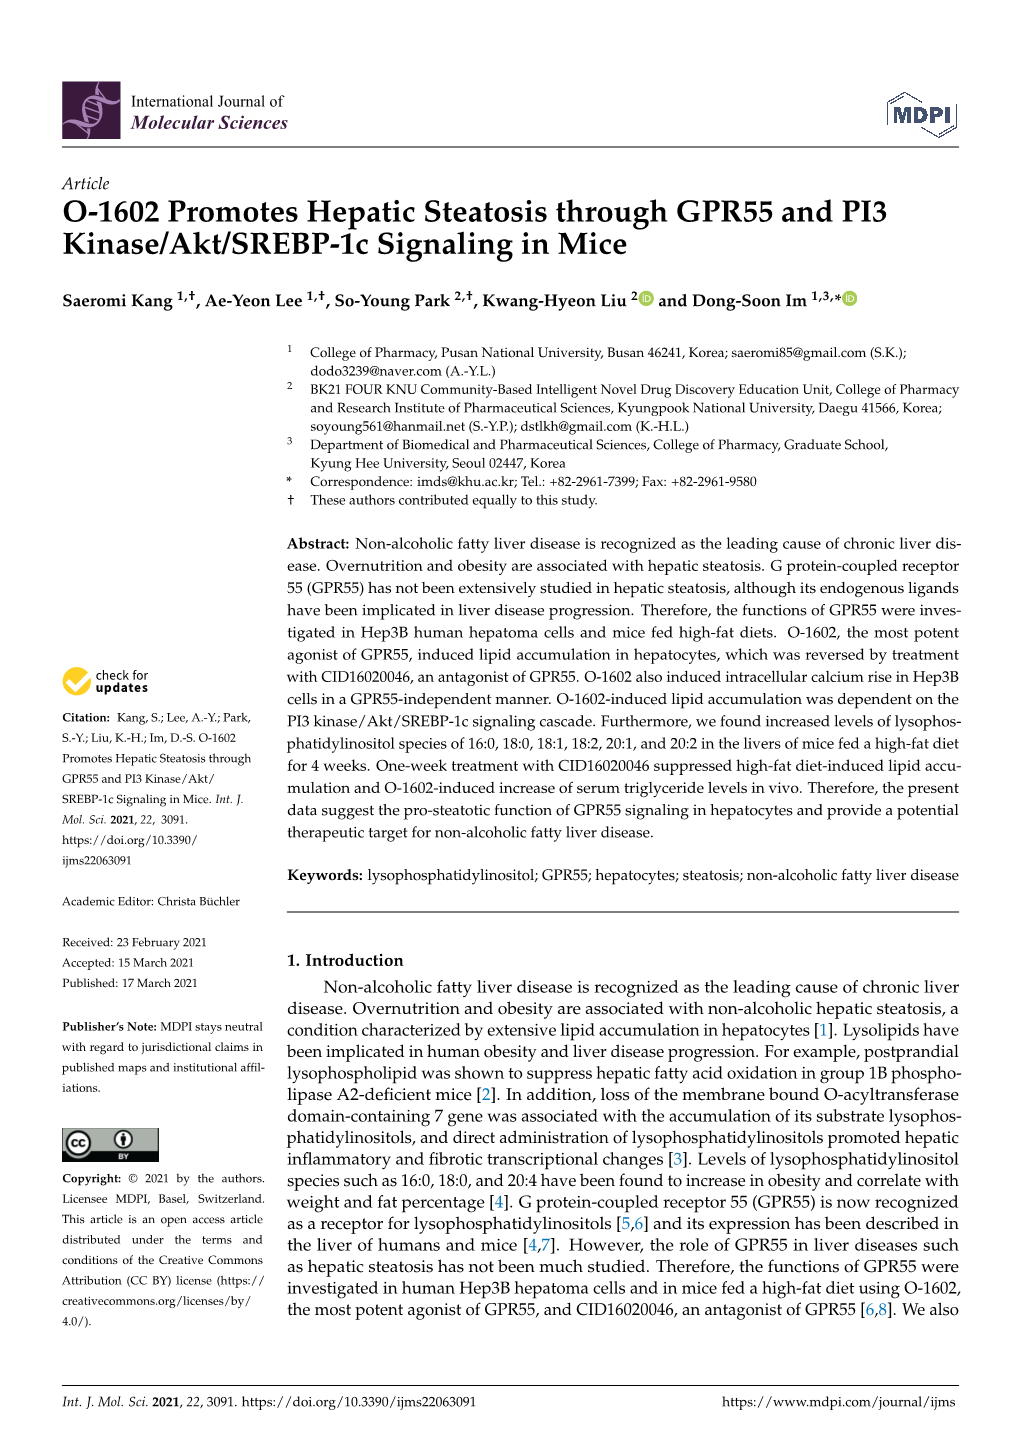 O-1602 Promotes Hepatic Steatosis Through GPR55 and PI3 Kinase/Akt/SREBP-1C Signaling in Mice